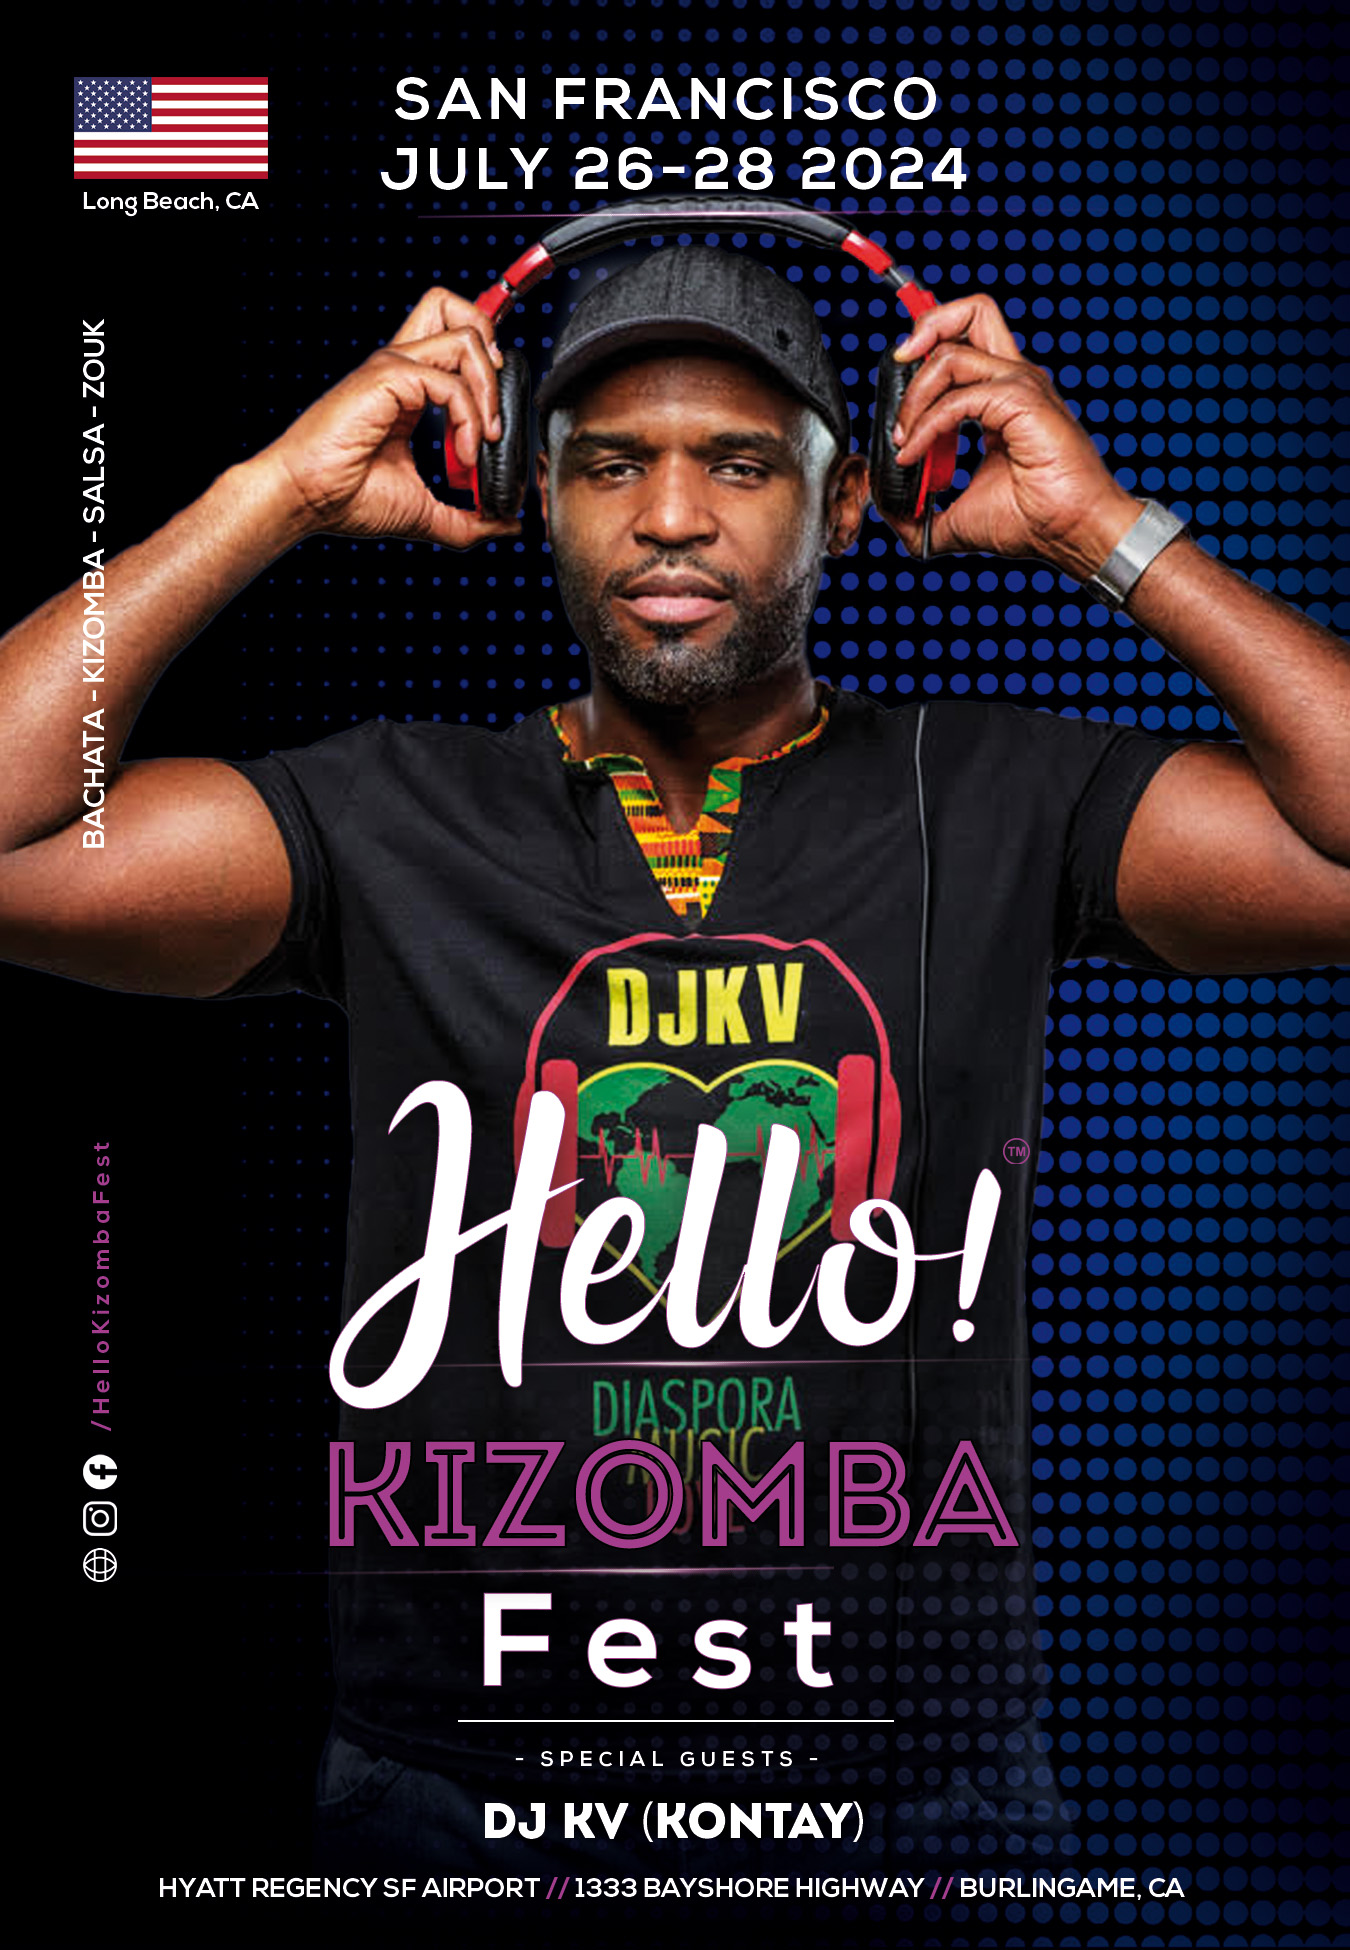 Hello Kizomba Fest - DJ KV Kontay - Long Beach, California